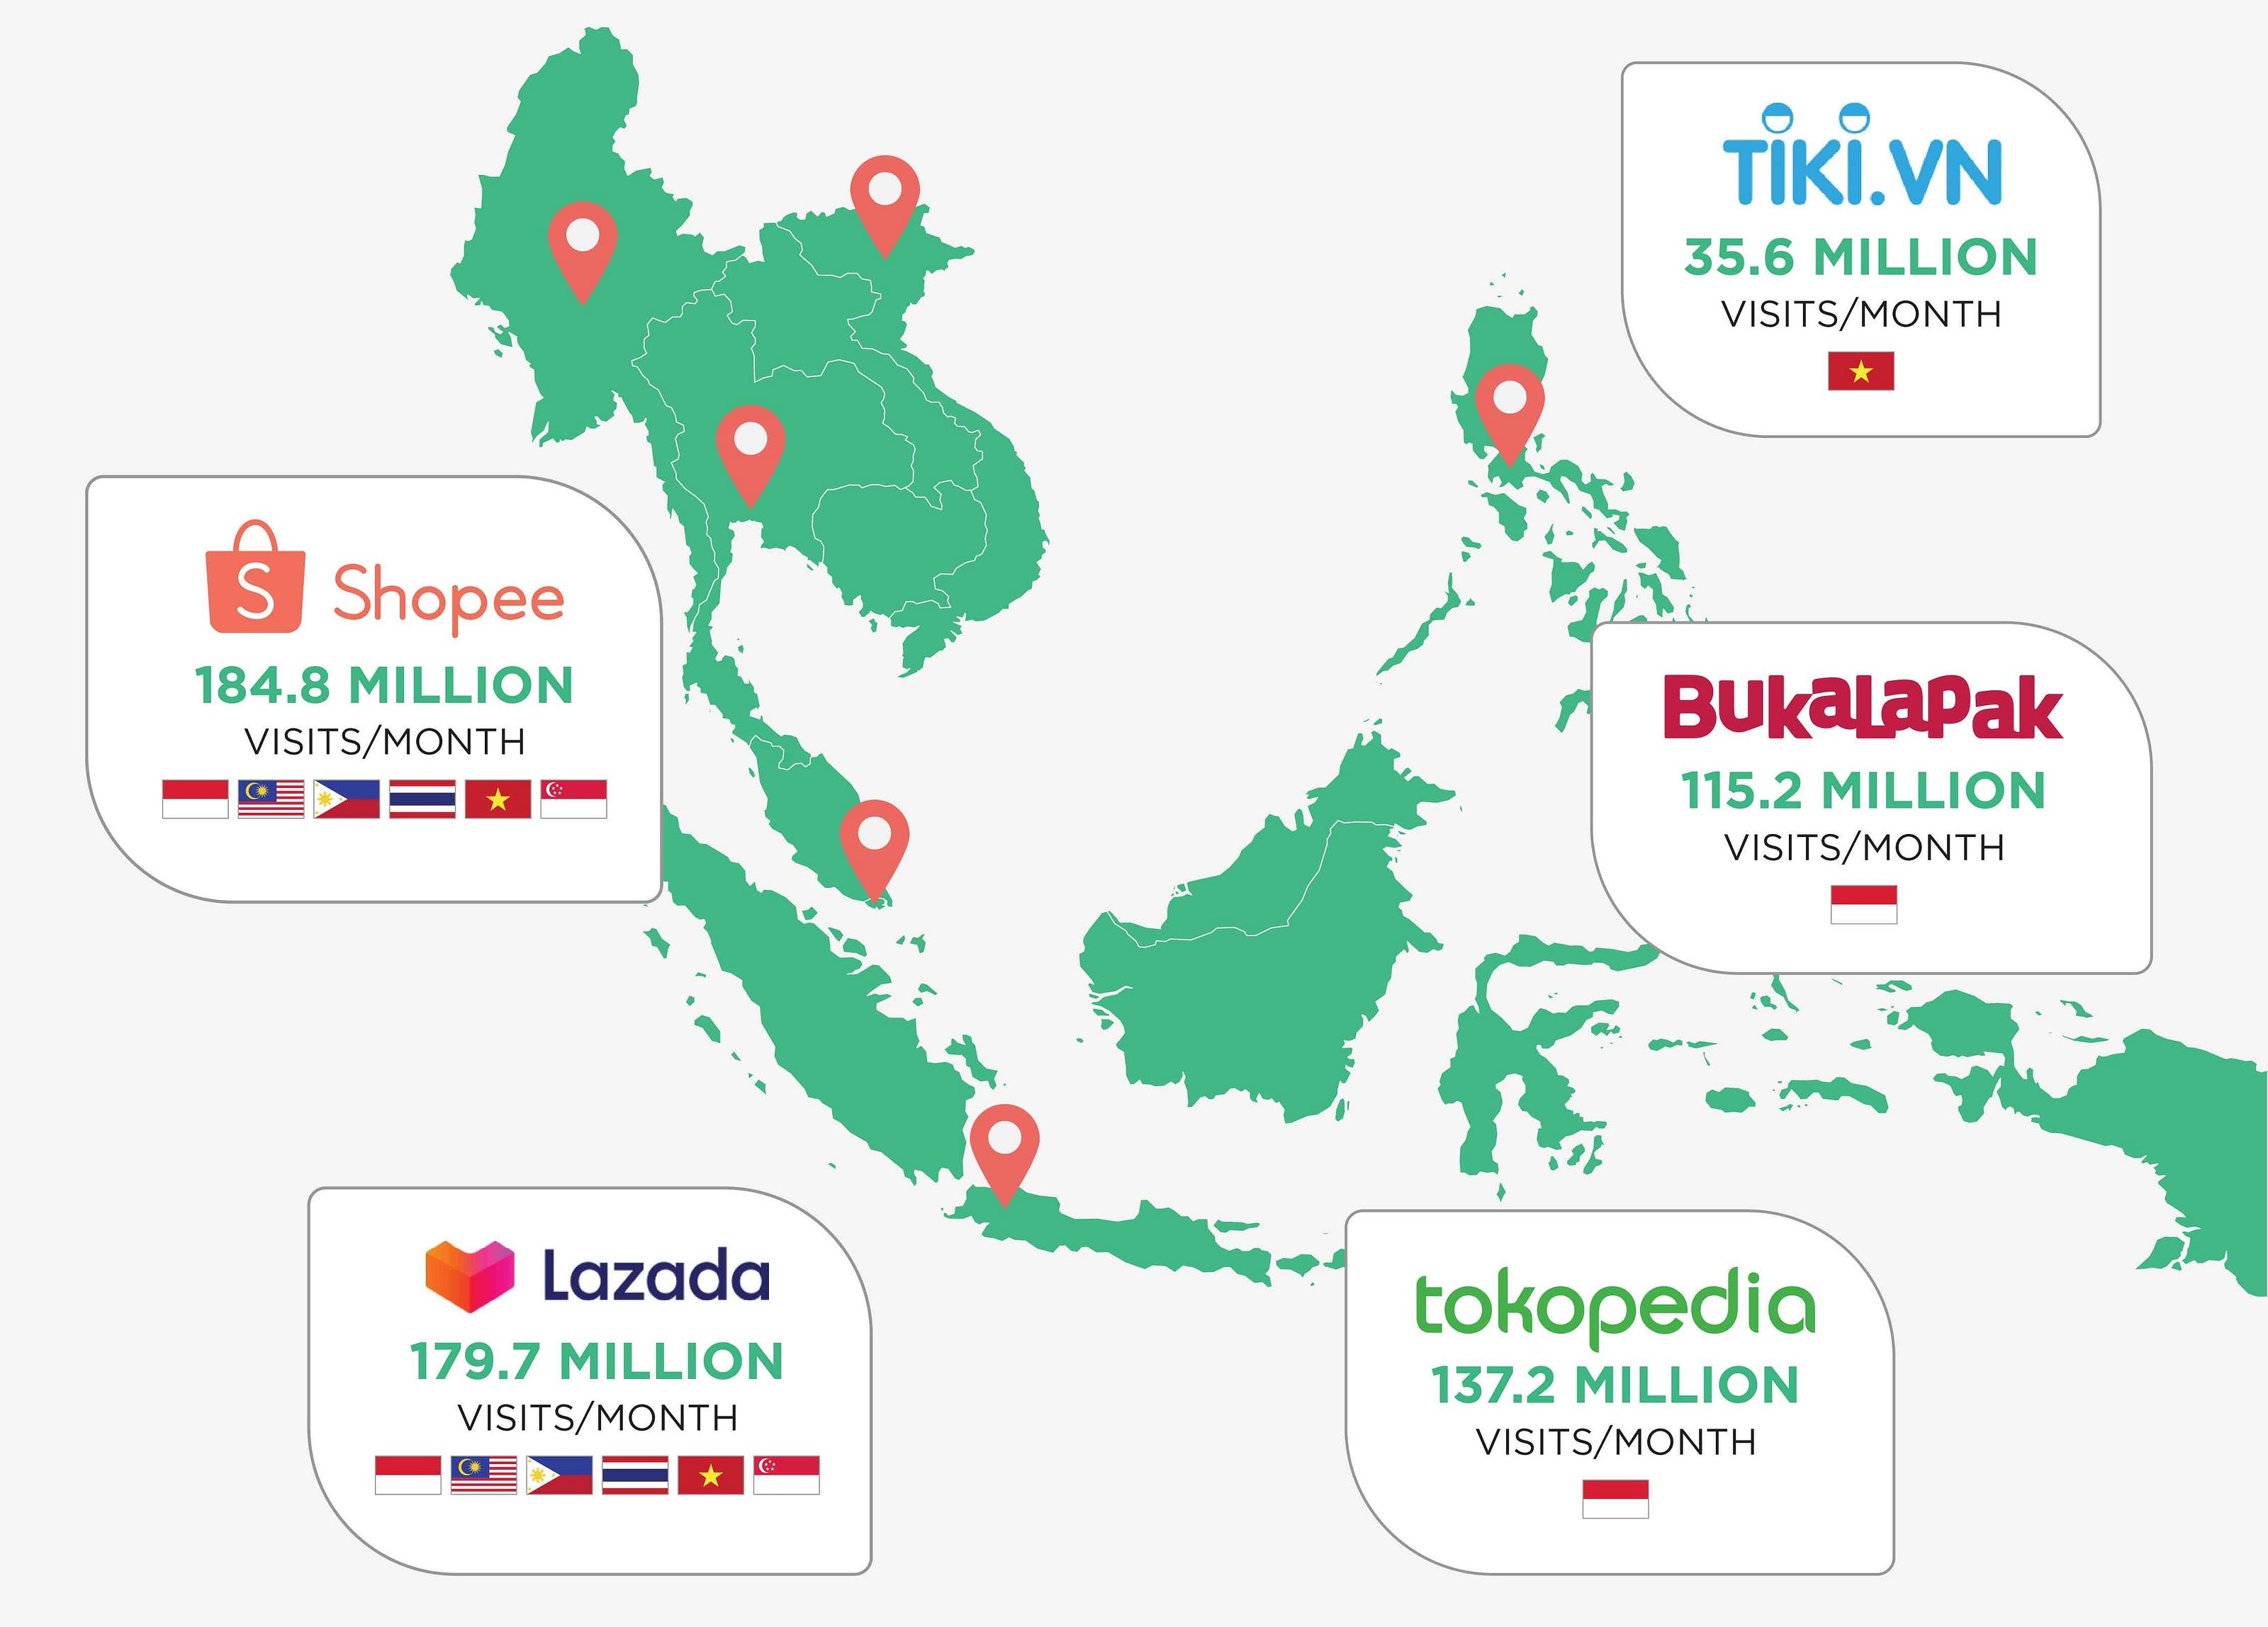 Shopee : Most popular e-commerce platform in Indonesia | by Ignatius